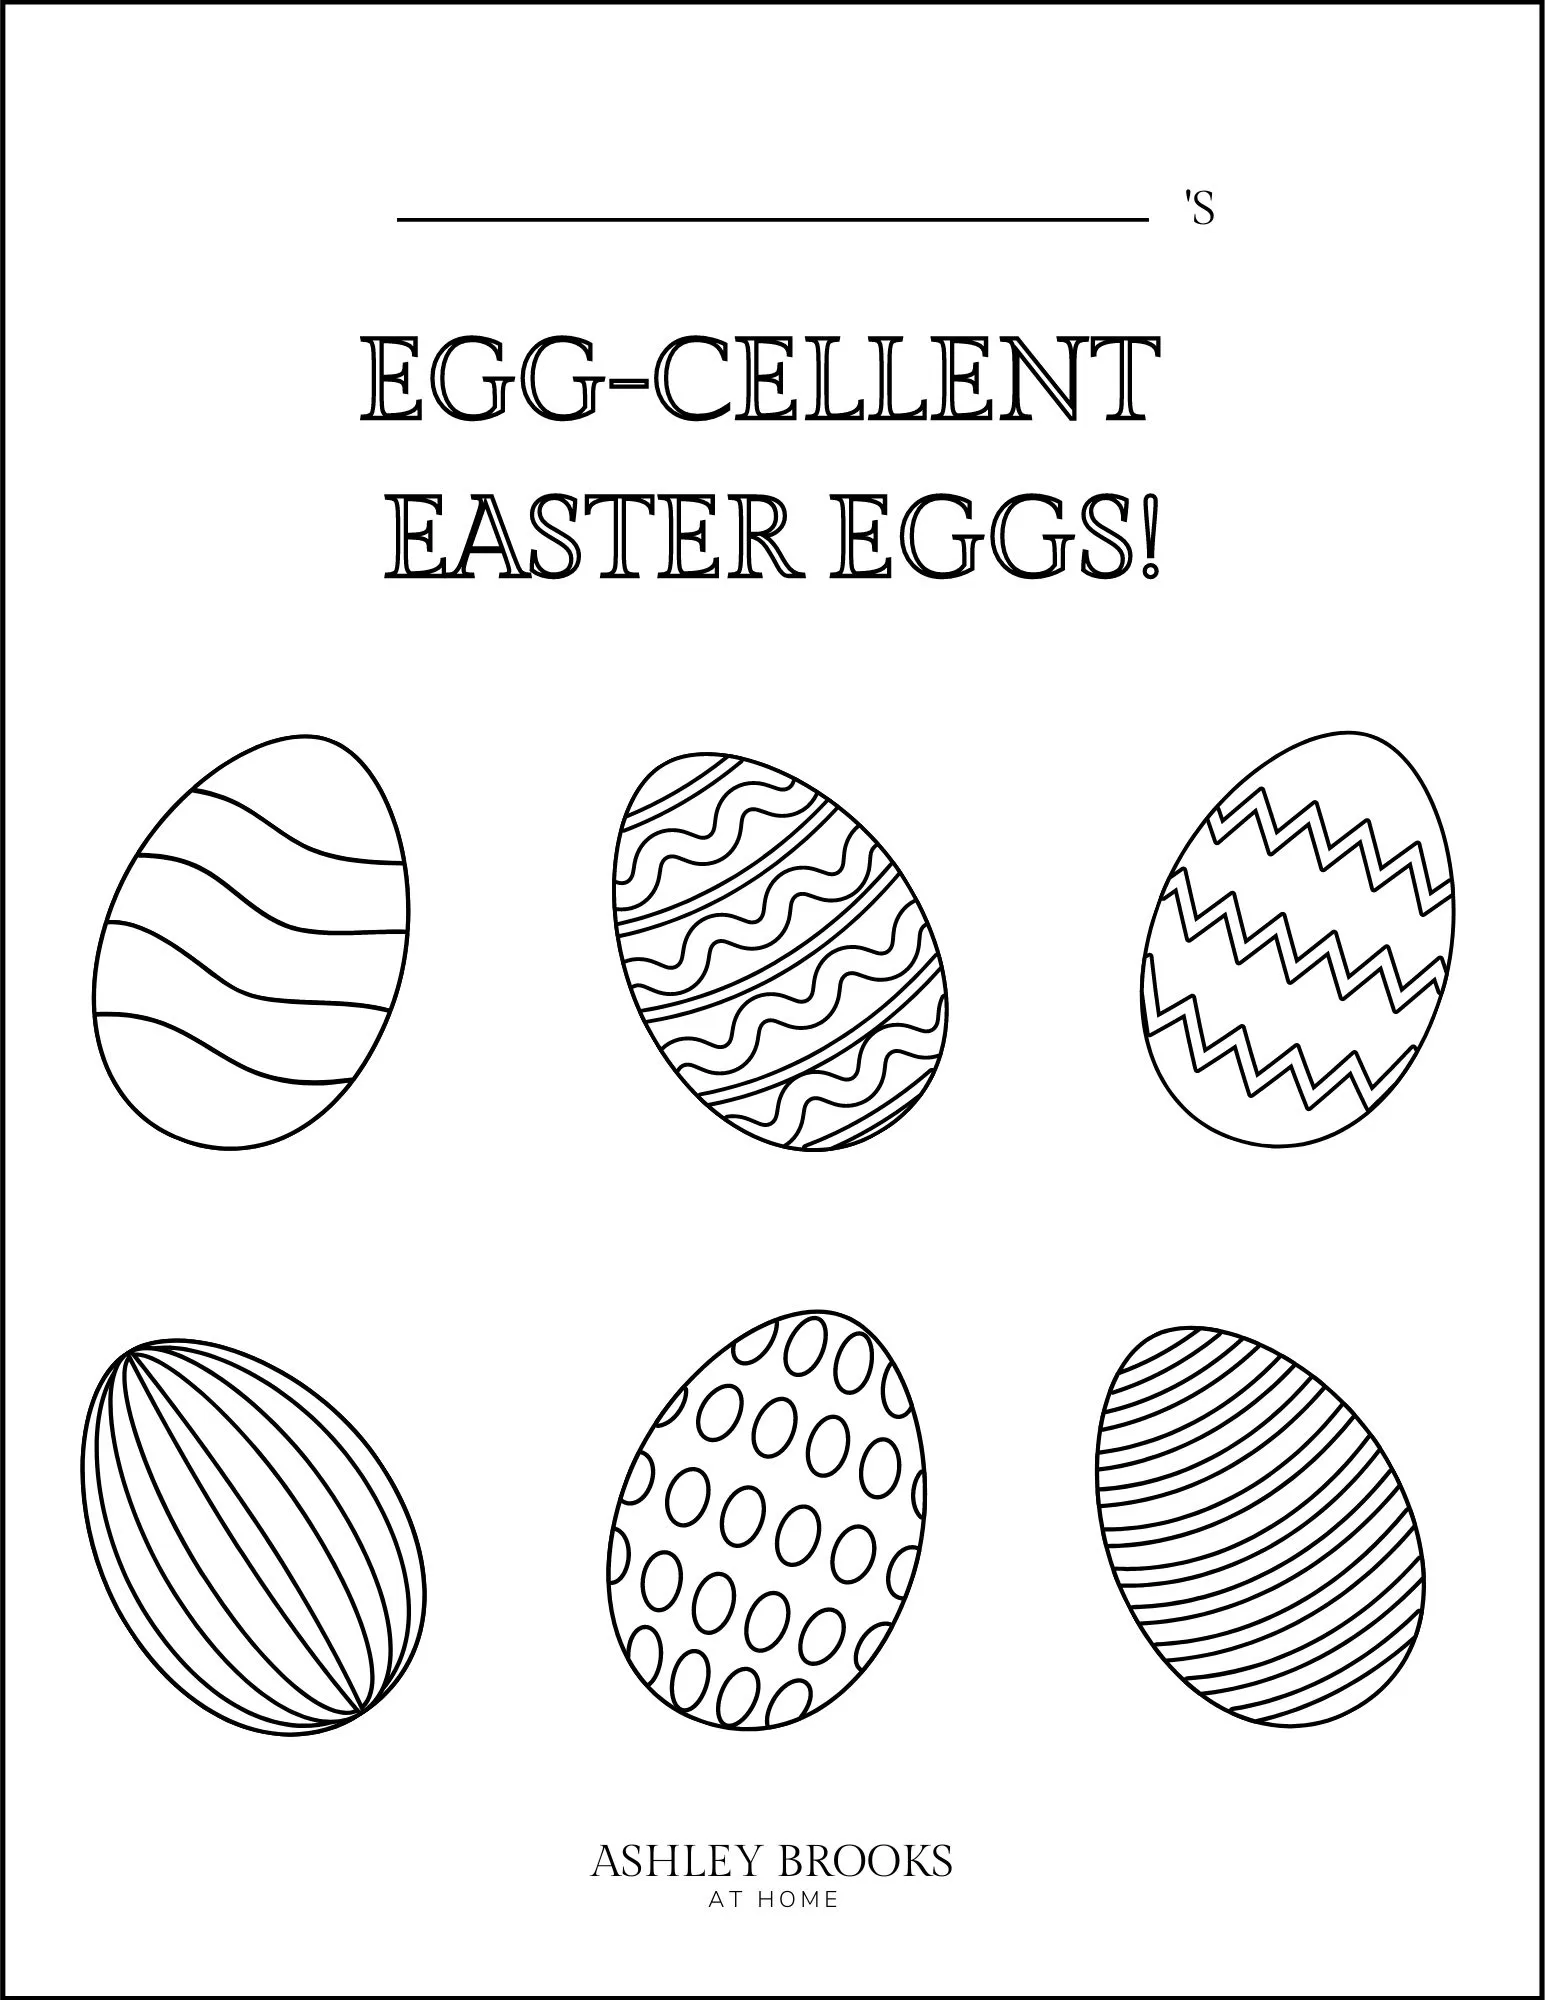 Easter eggs printable